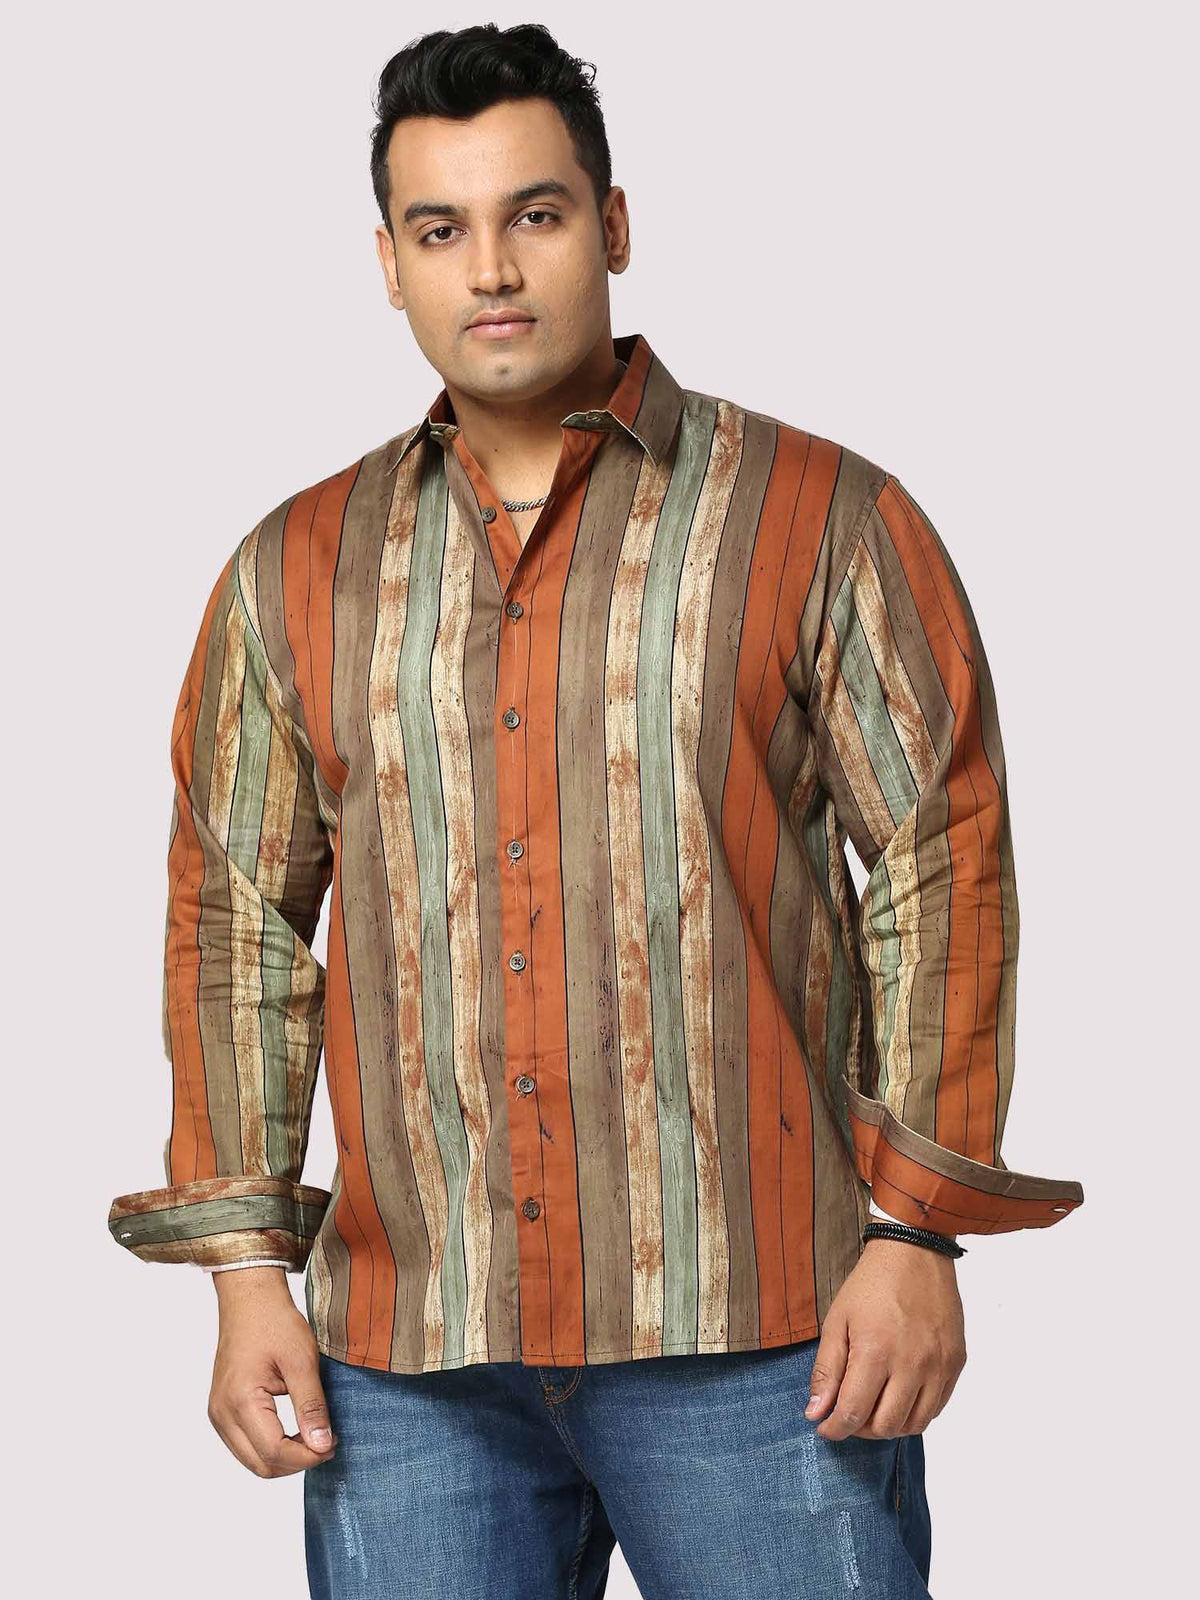 Guniaa Blaze Digital Printed Full-Sleeves Shirt - Guniaa Fashions